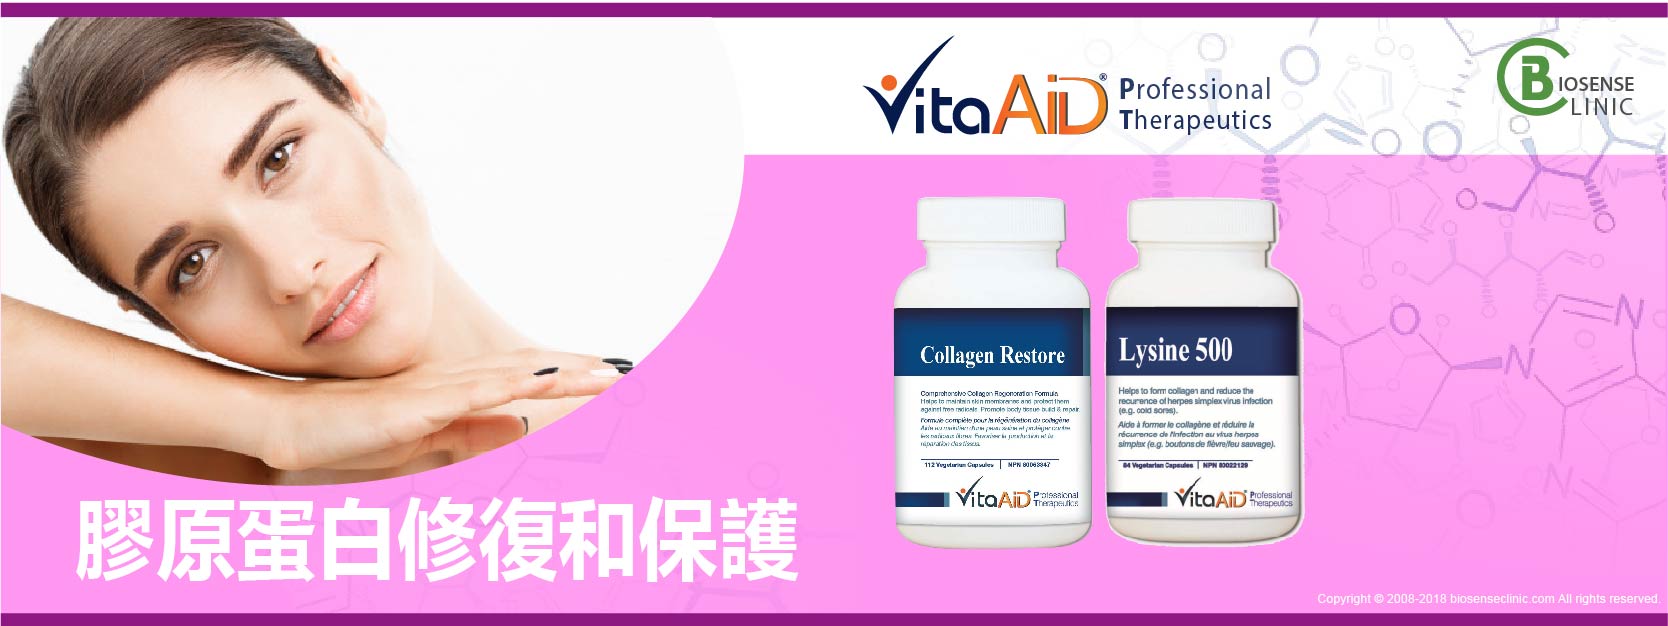 VitaAid category banner 膠原蛋白修復和保護